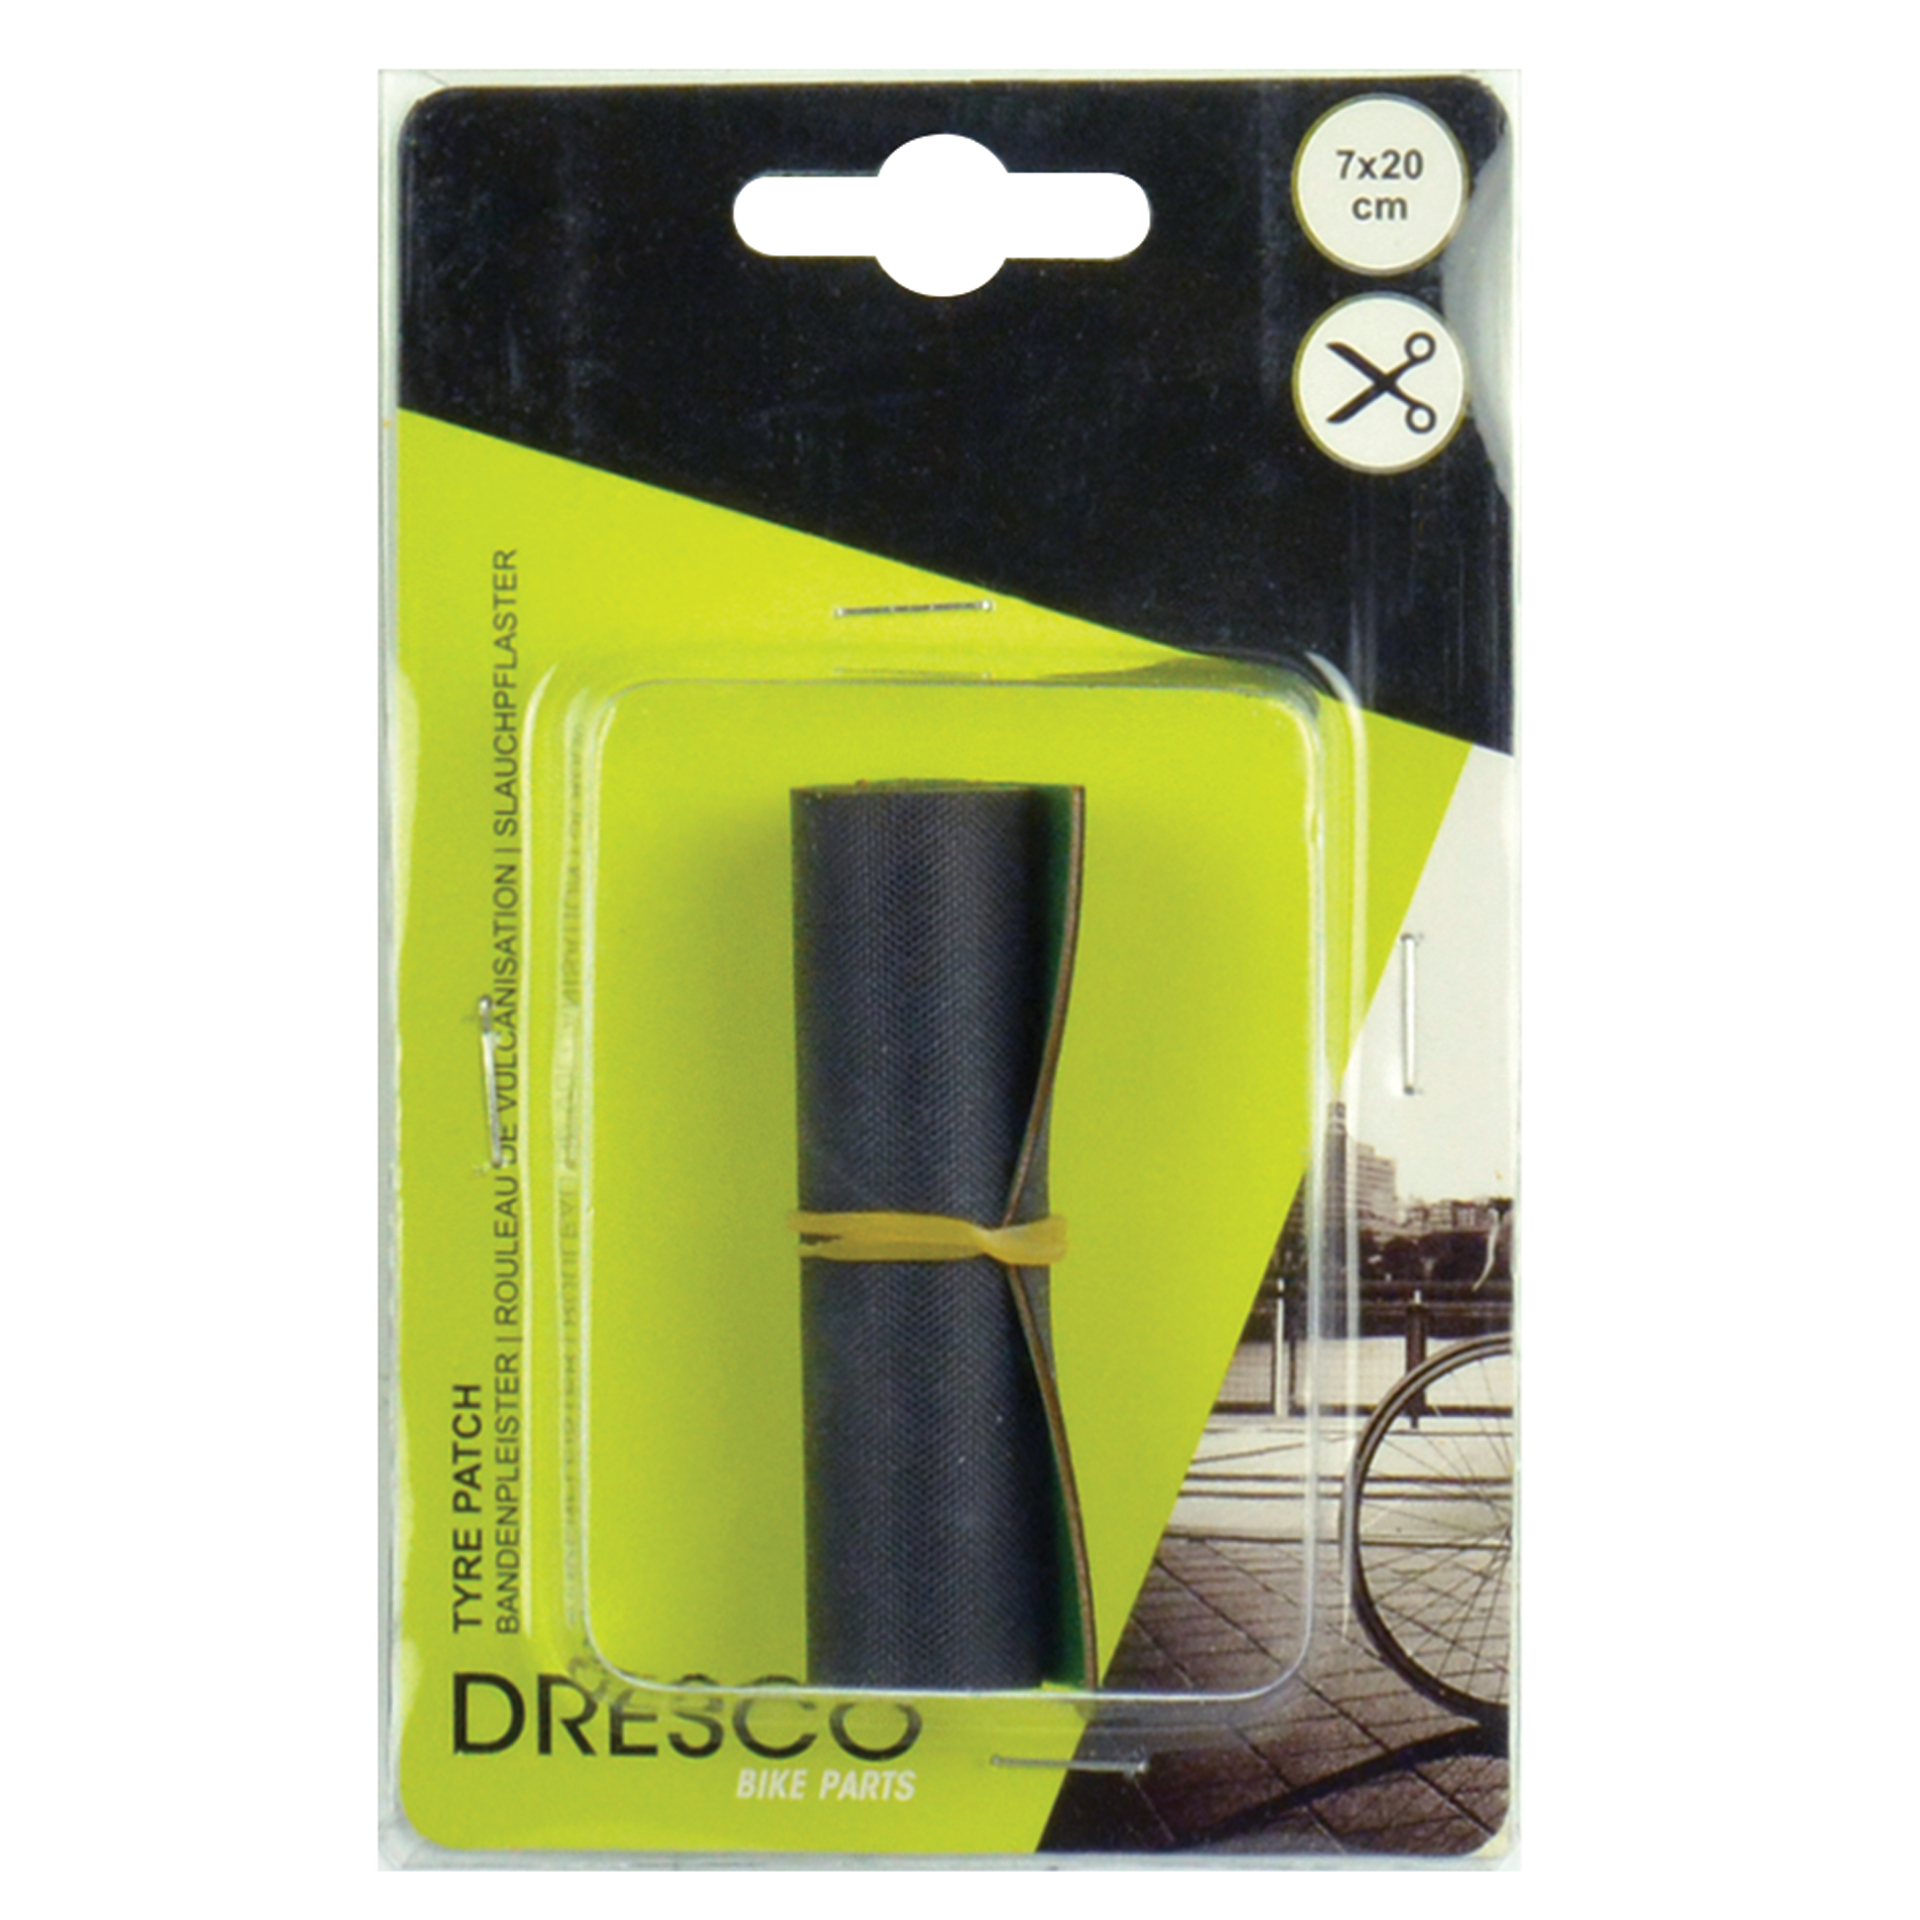 Dresco Dresco Bandenplak knippleister 7x20cm 5251502